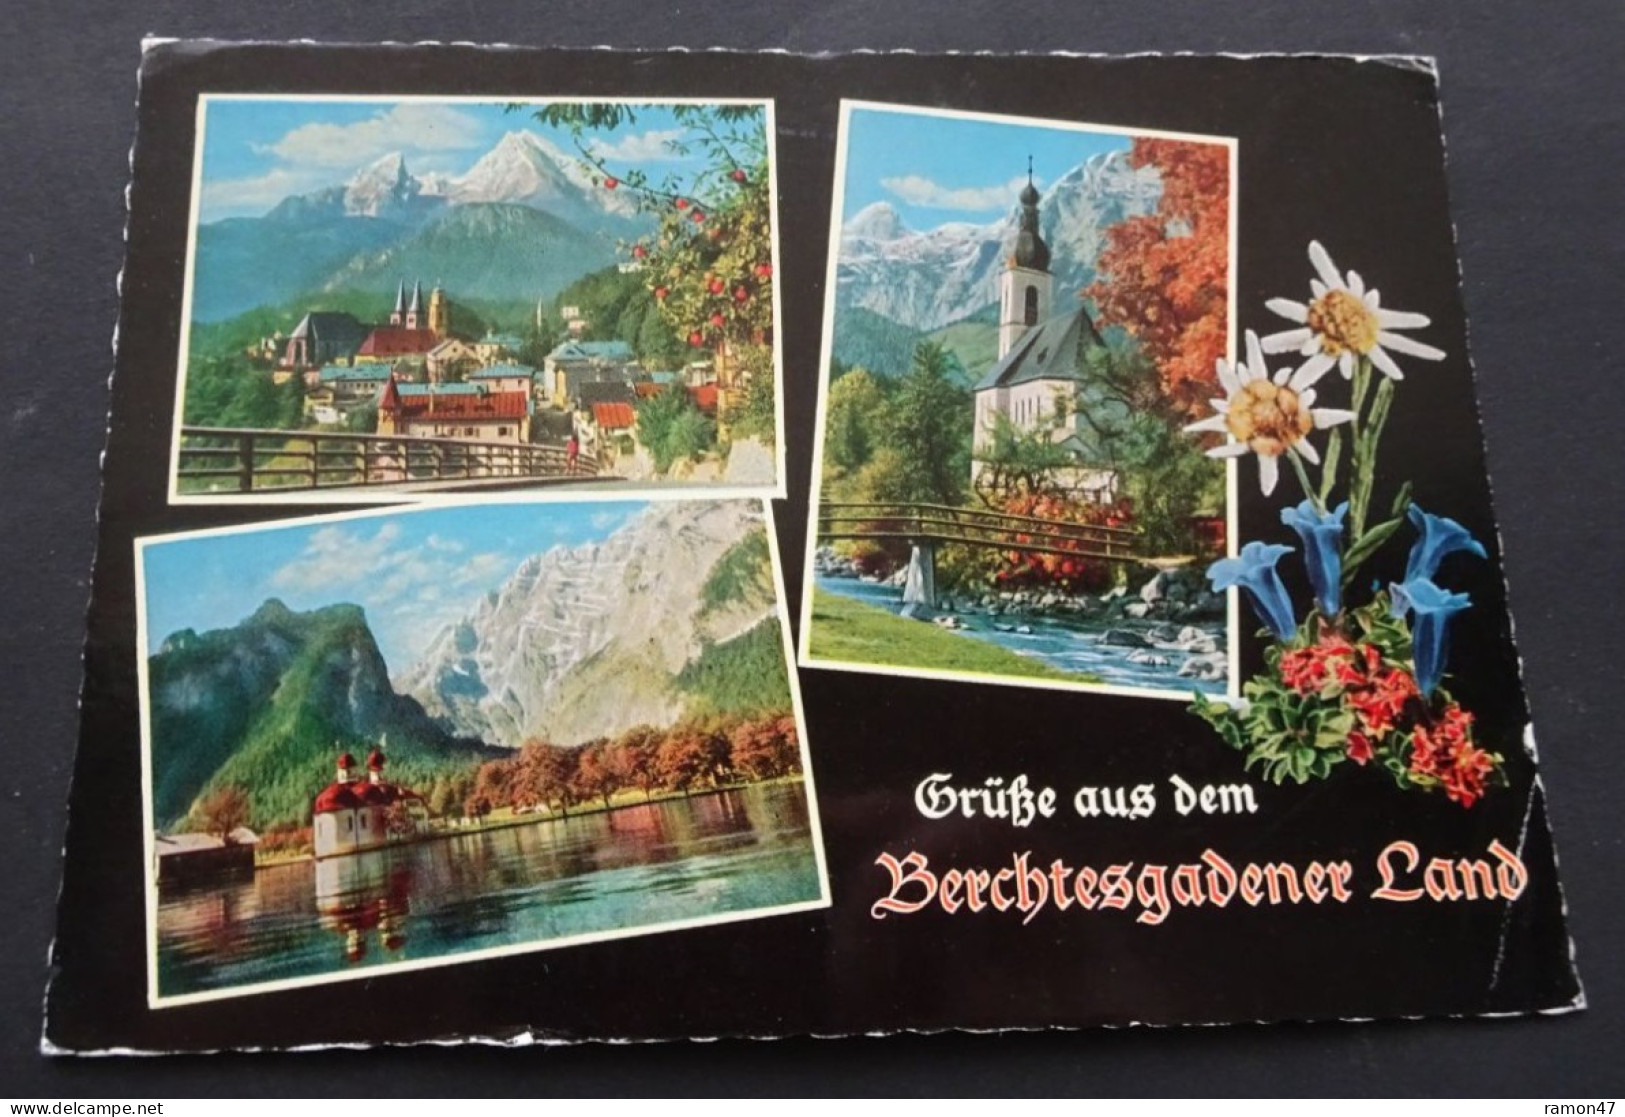 Grüsse Aus Dem Berchtesgadener Land - Aufnahme U. Verlag F.G. Zeitz, Königssee - # FK 276 - Saluti Da.../ Gruss Aus...